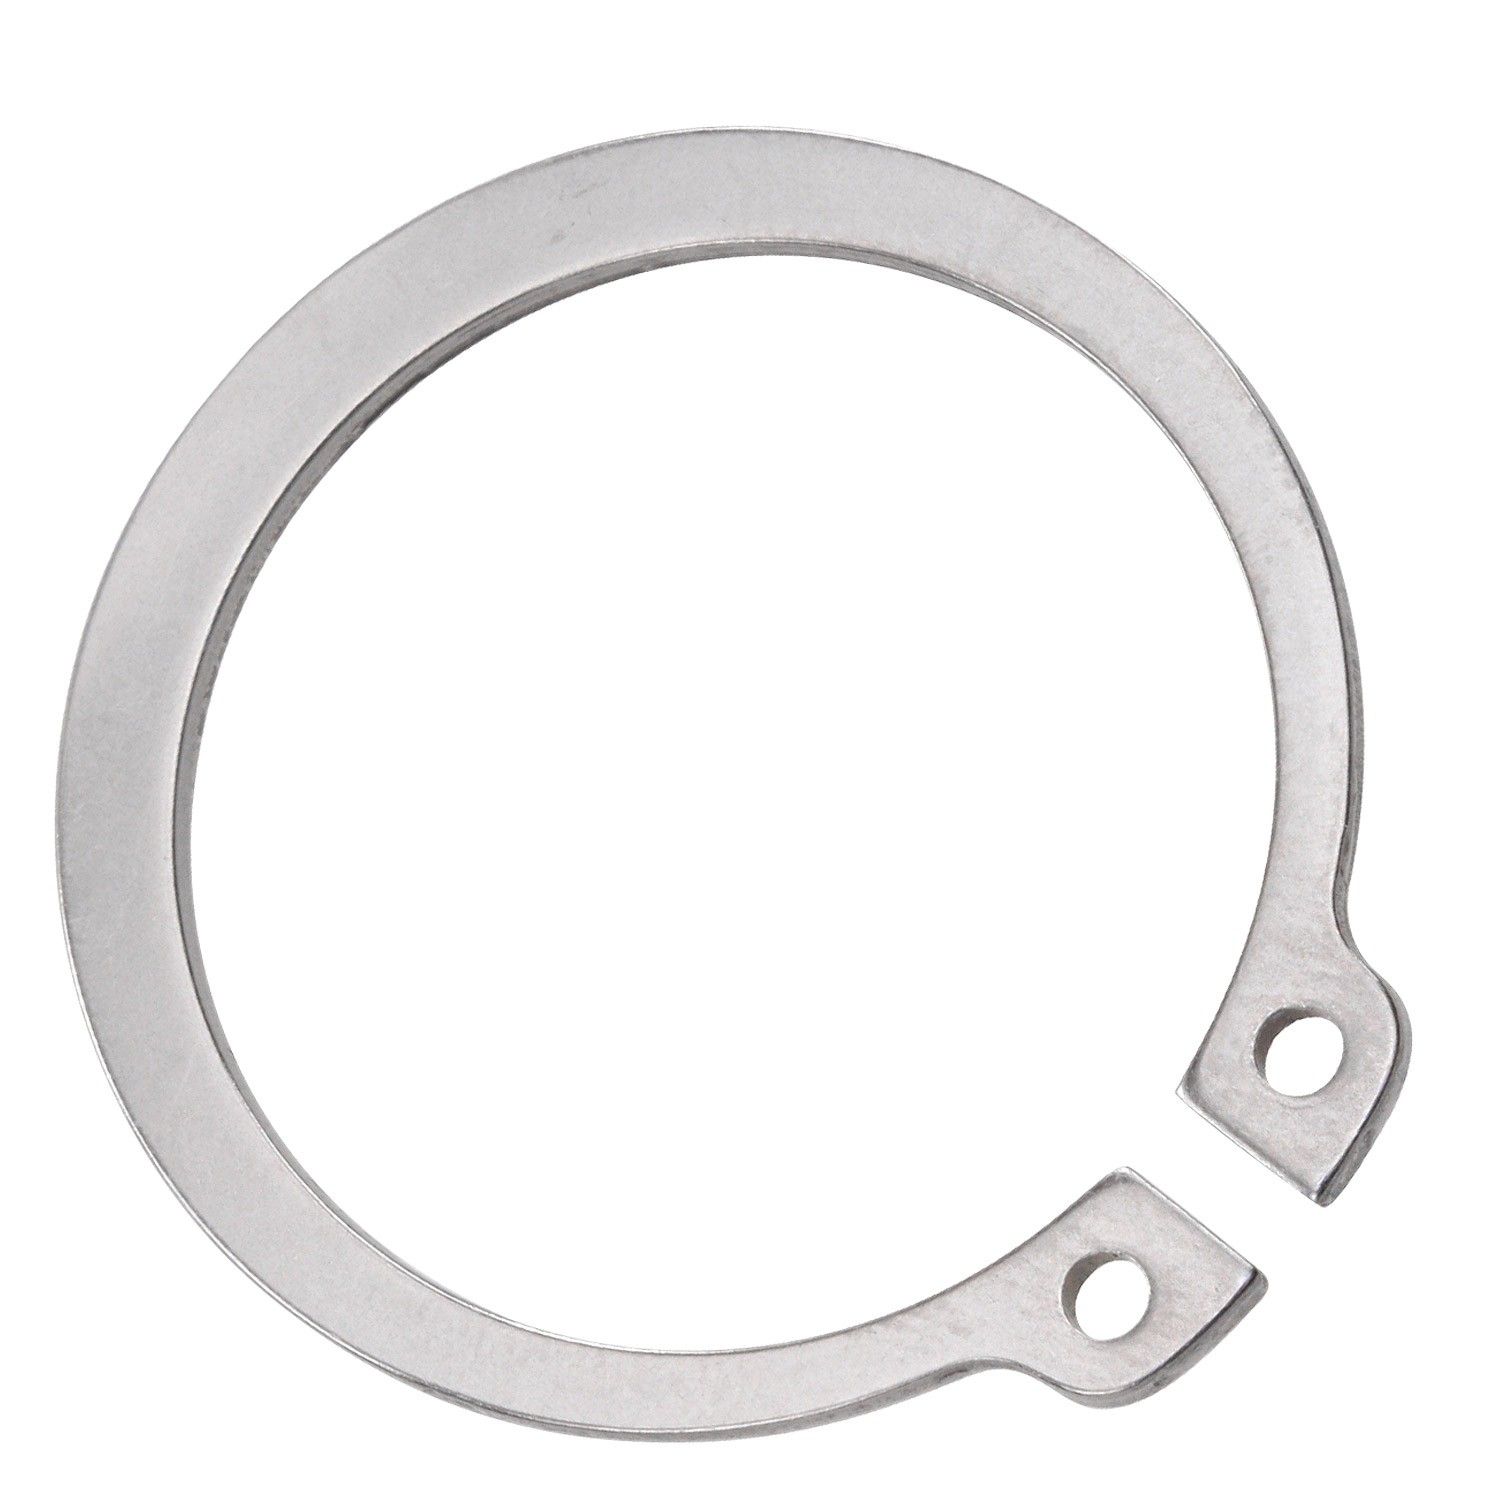 Кольцо стопорное наружное 30х1,5 DIN 471, нержавеющая сталь 1.4122 (А2) - фото